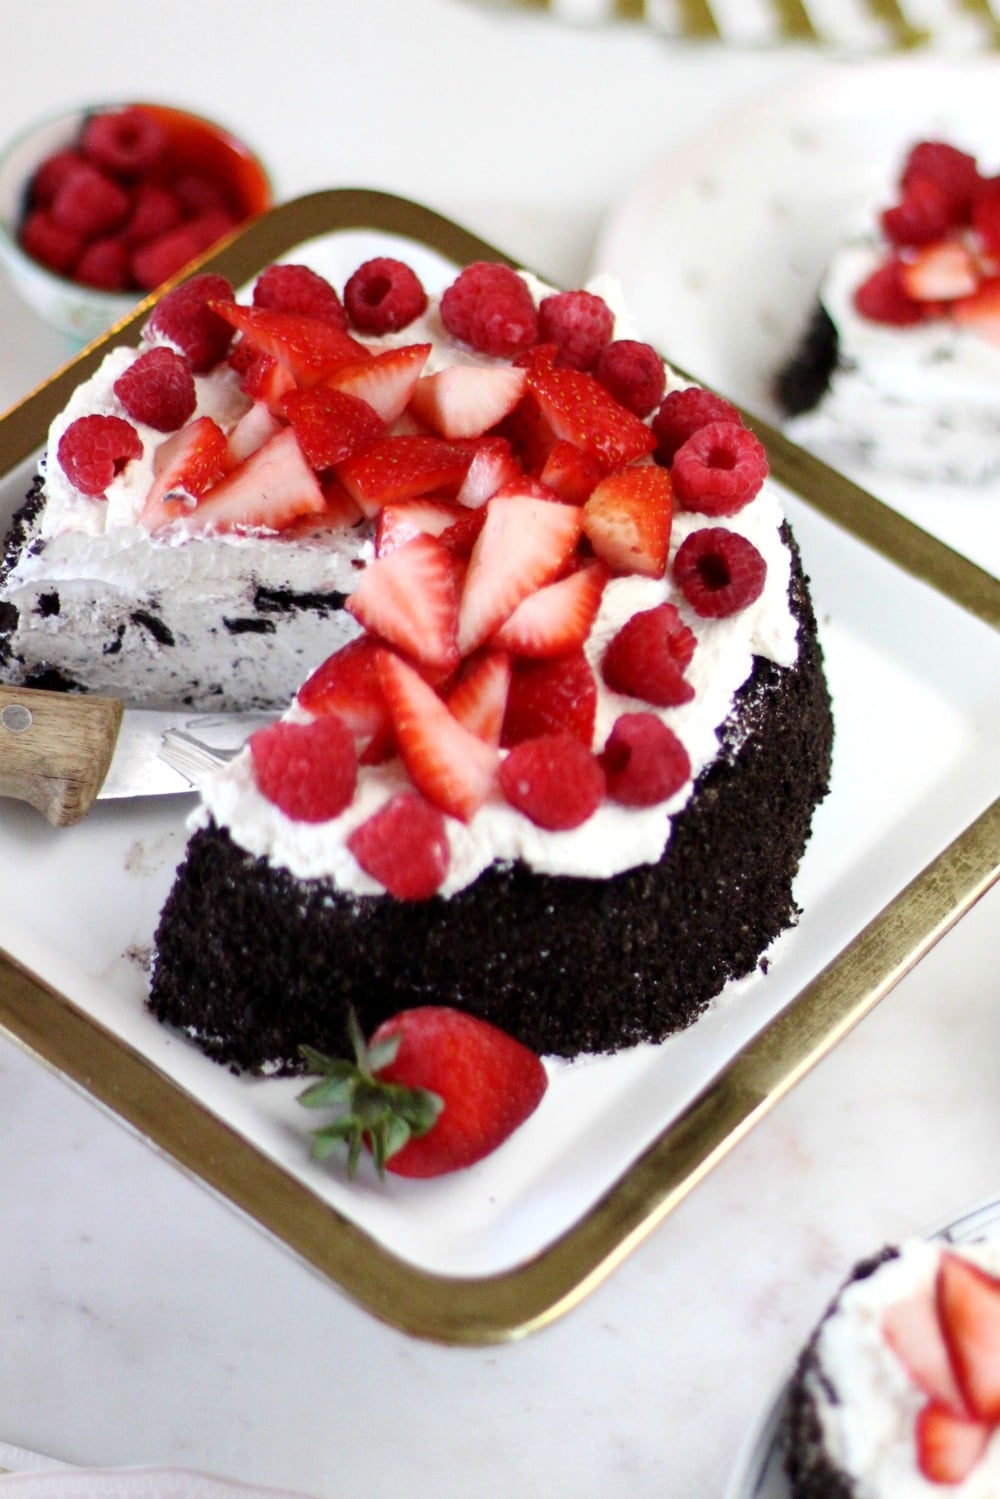 Berry OREO® Ice Cream Cake Recipe with Strawberries and Raspberries